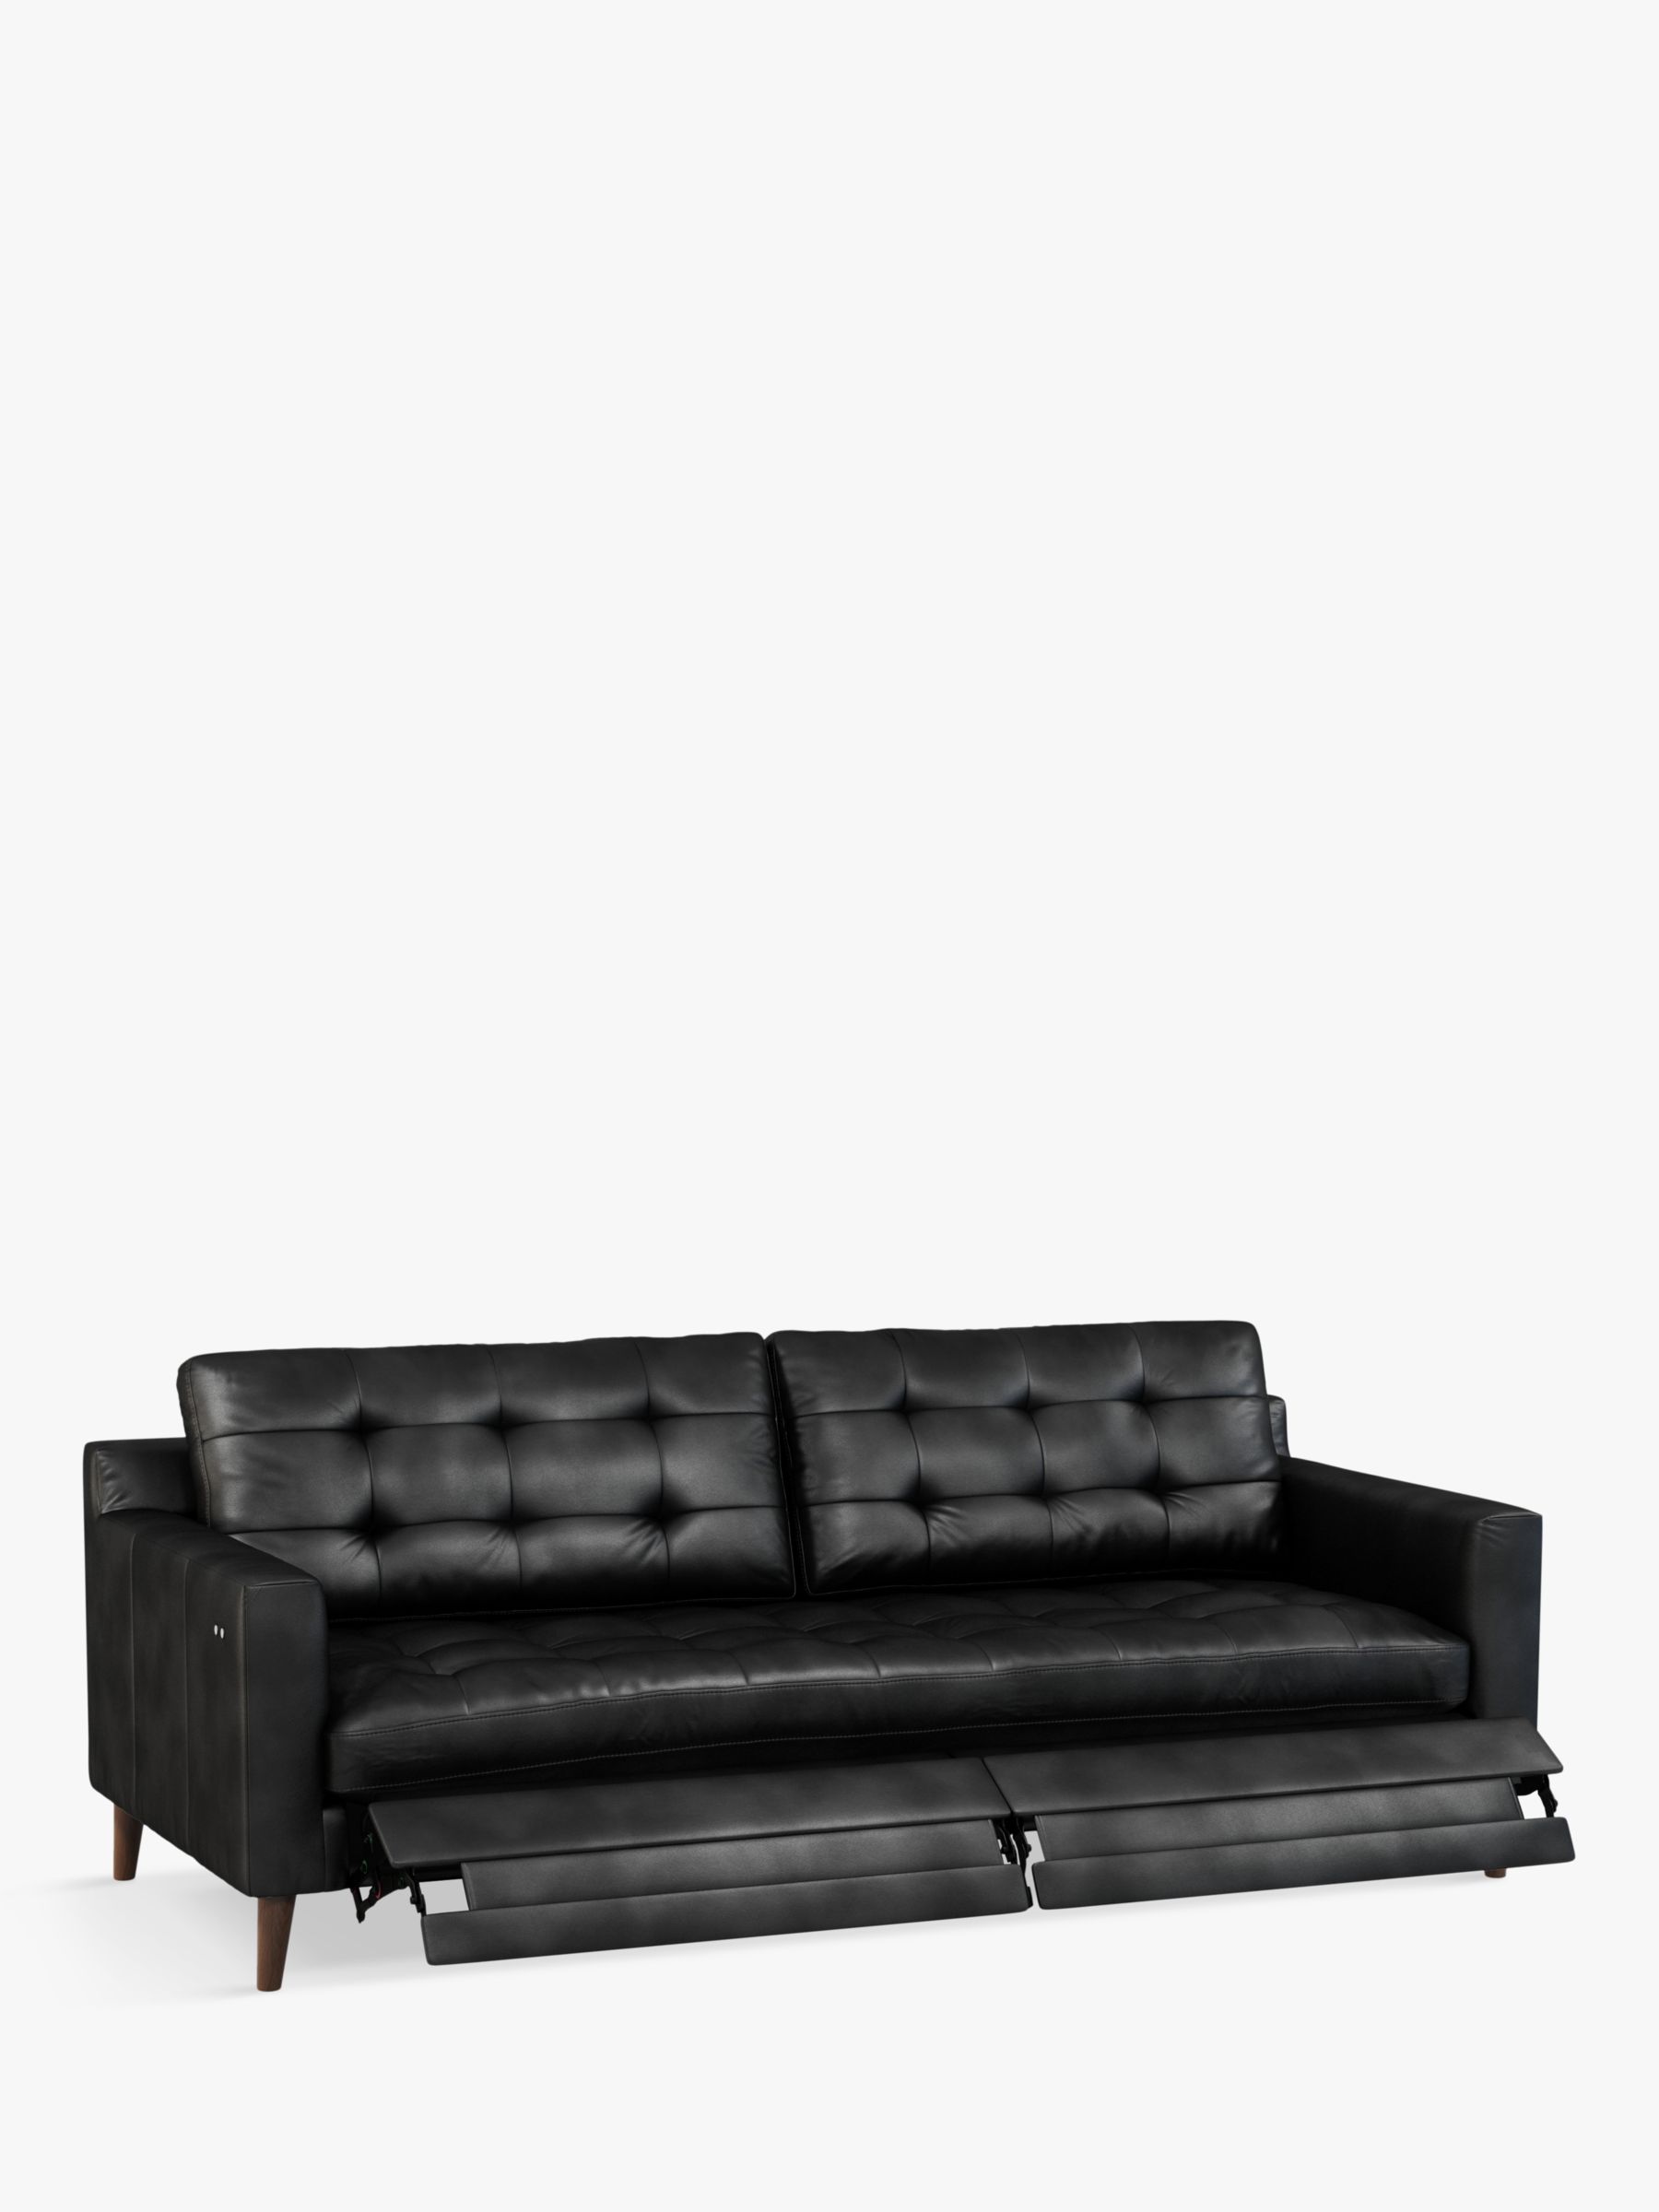 Draper Range, John Lewis Draper Motion Large 3 Seater Leather Sofa with Footrest Mechanism, Dark Leg, Contempo Black